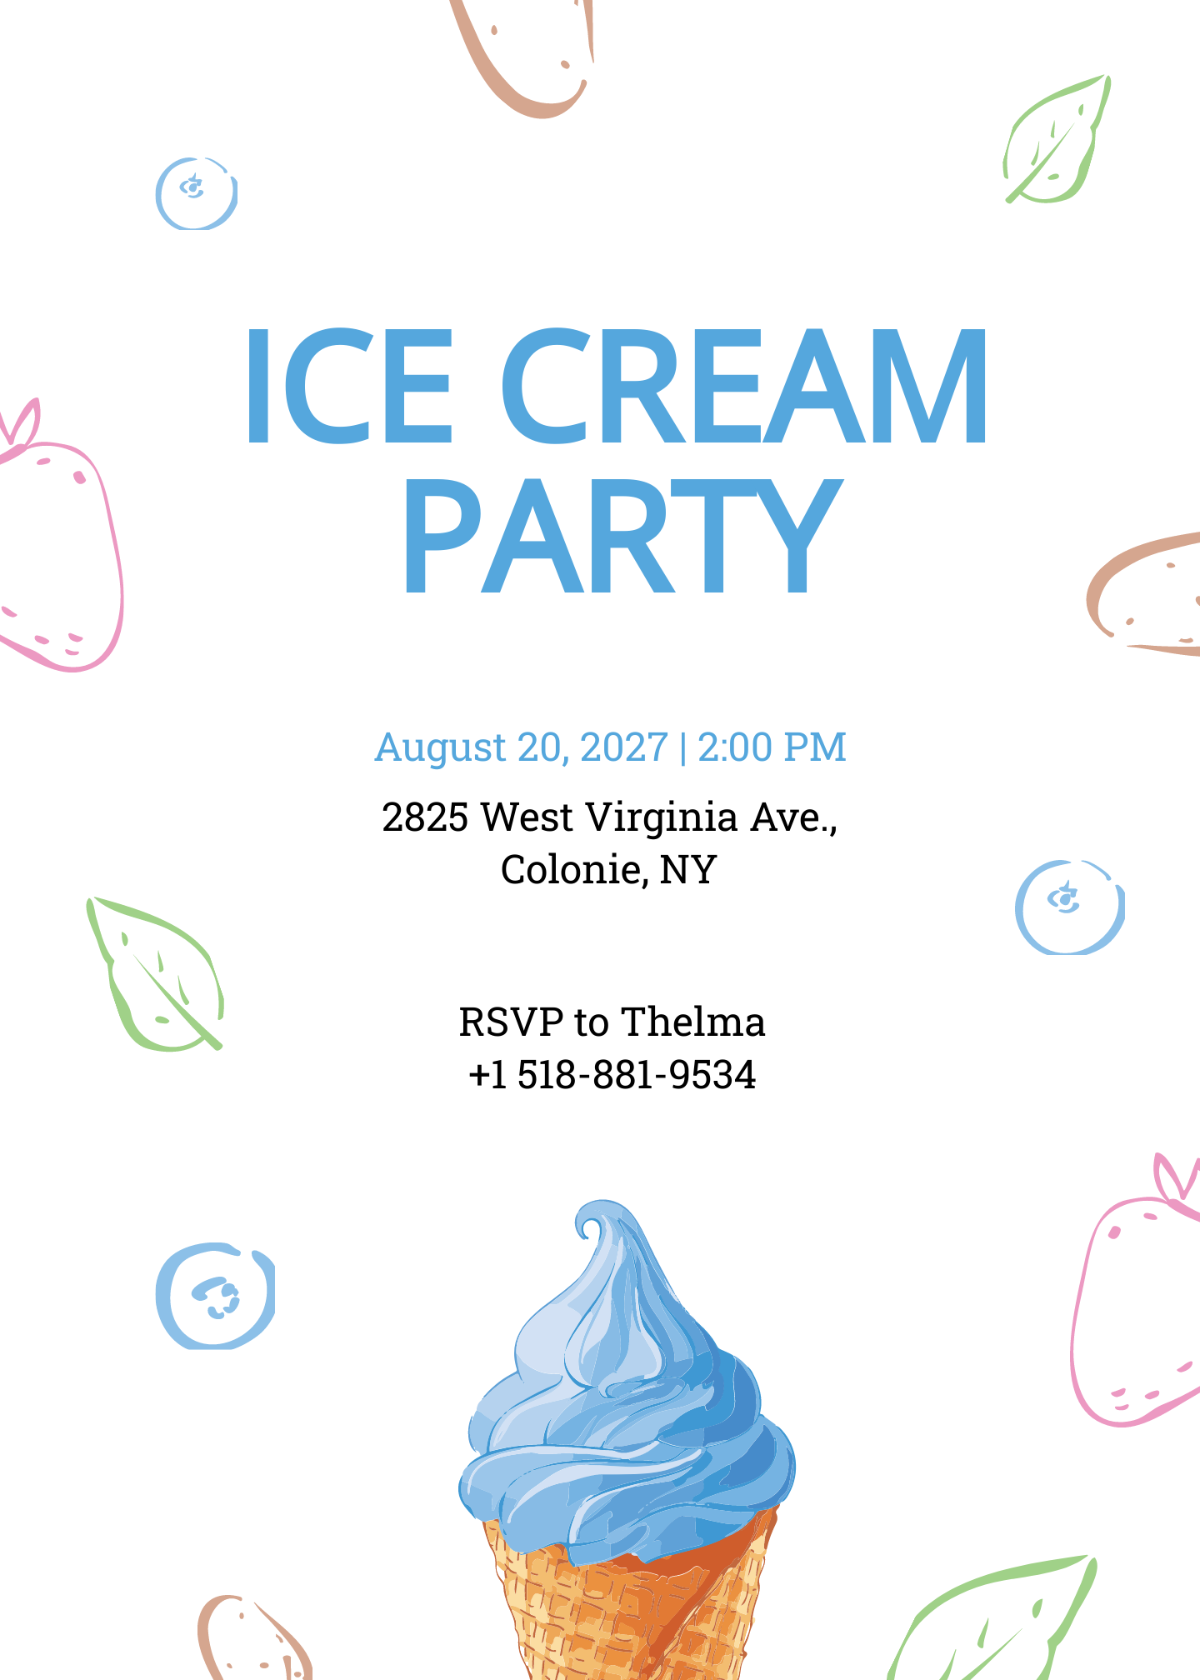 Ice Cream Party Invitation Template